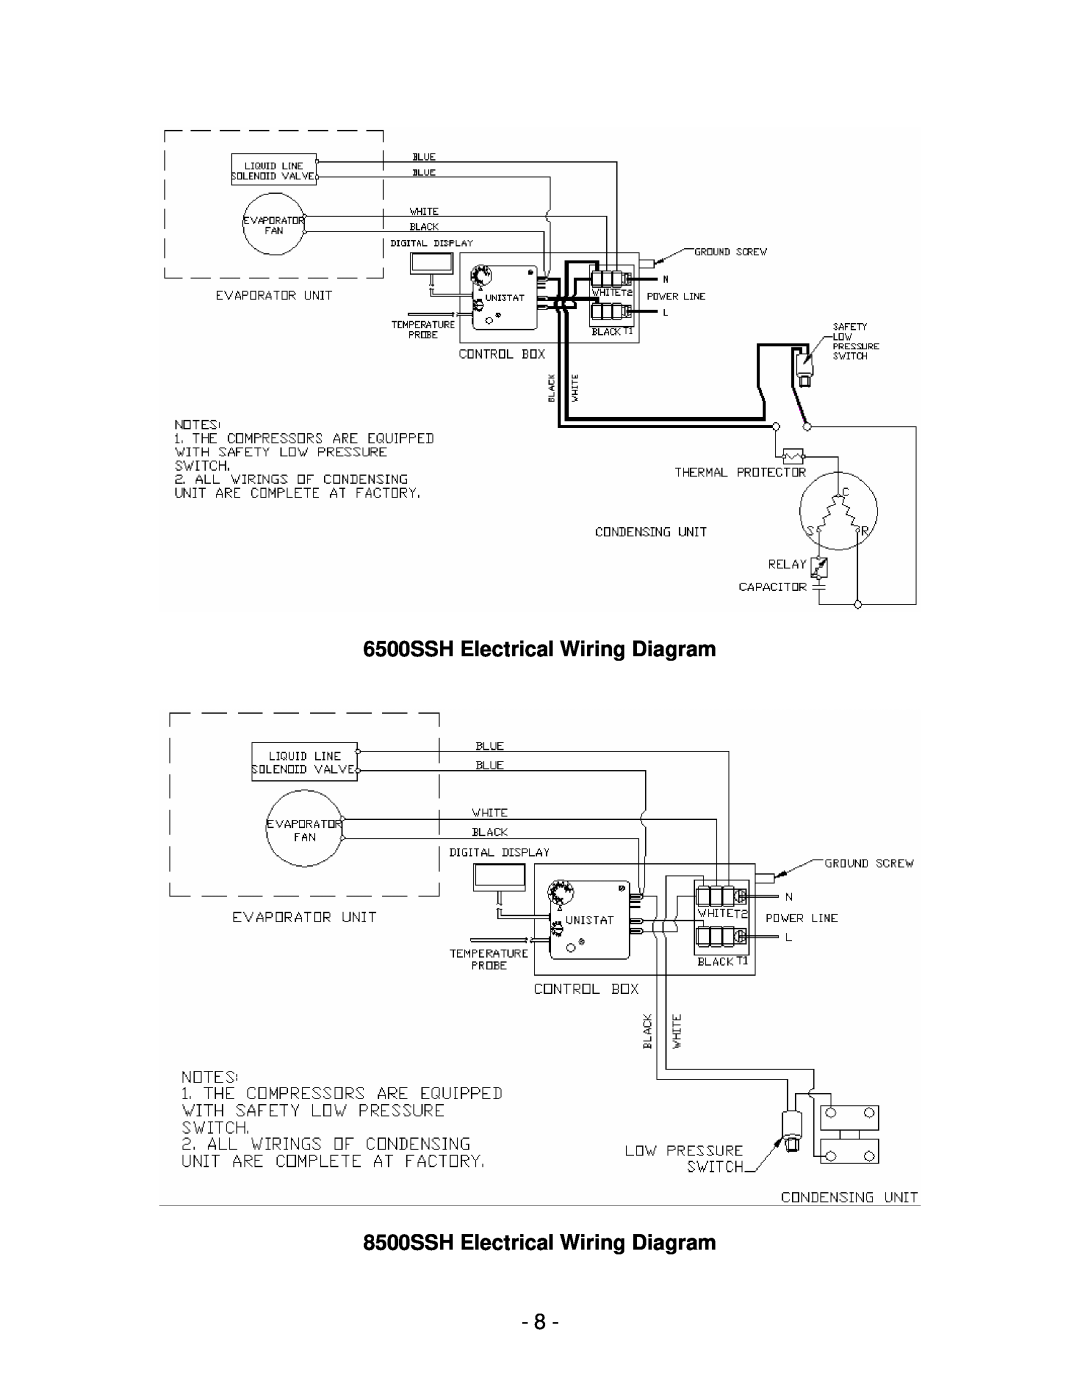 Vinotemp WM 6500SSH, 4500SSH, WM 2500SSH manual 6500SSH Electrical Wiring Diagram, 8500SSH Electrical Wiring Diagram 